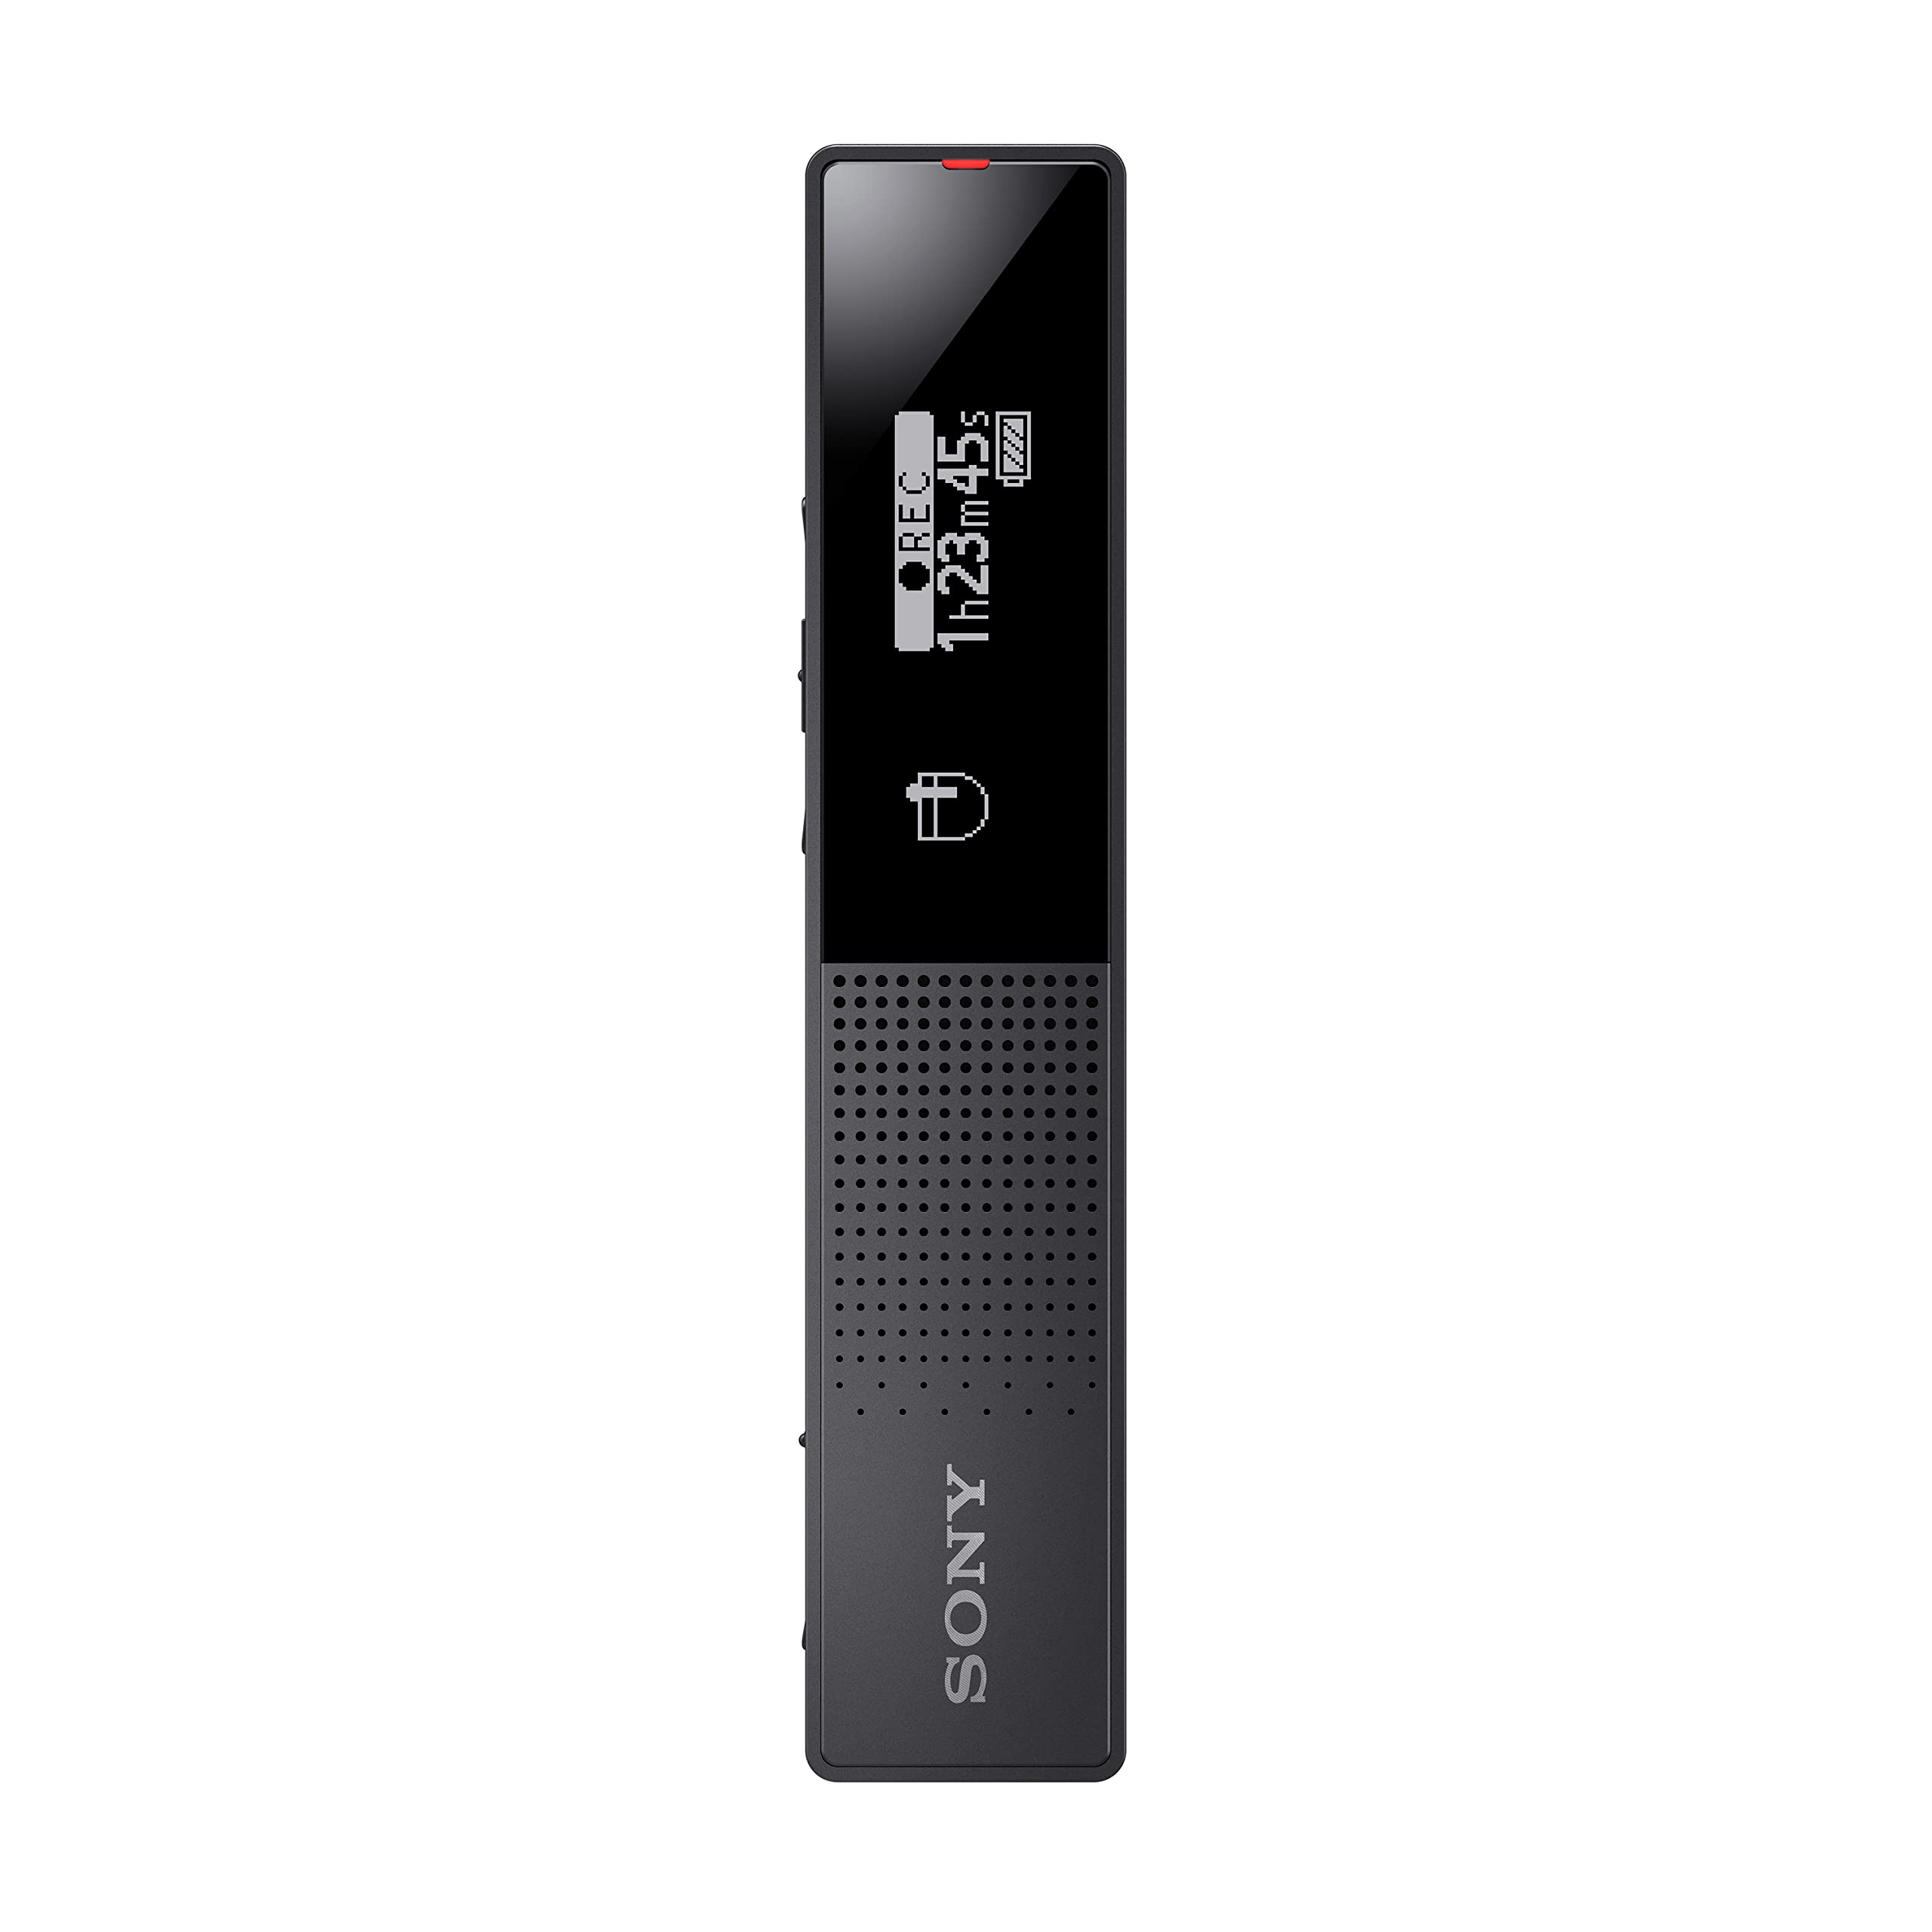 Sony ICD-TX660 - OLED 디스플레이를 탑재한 슬림형 디지털 음성 녹음기